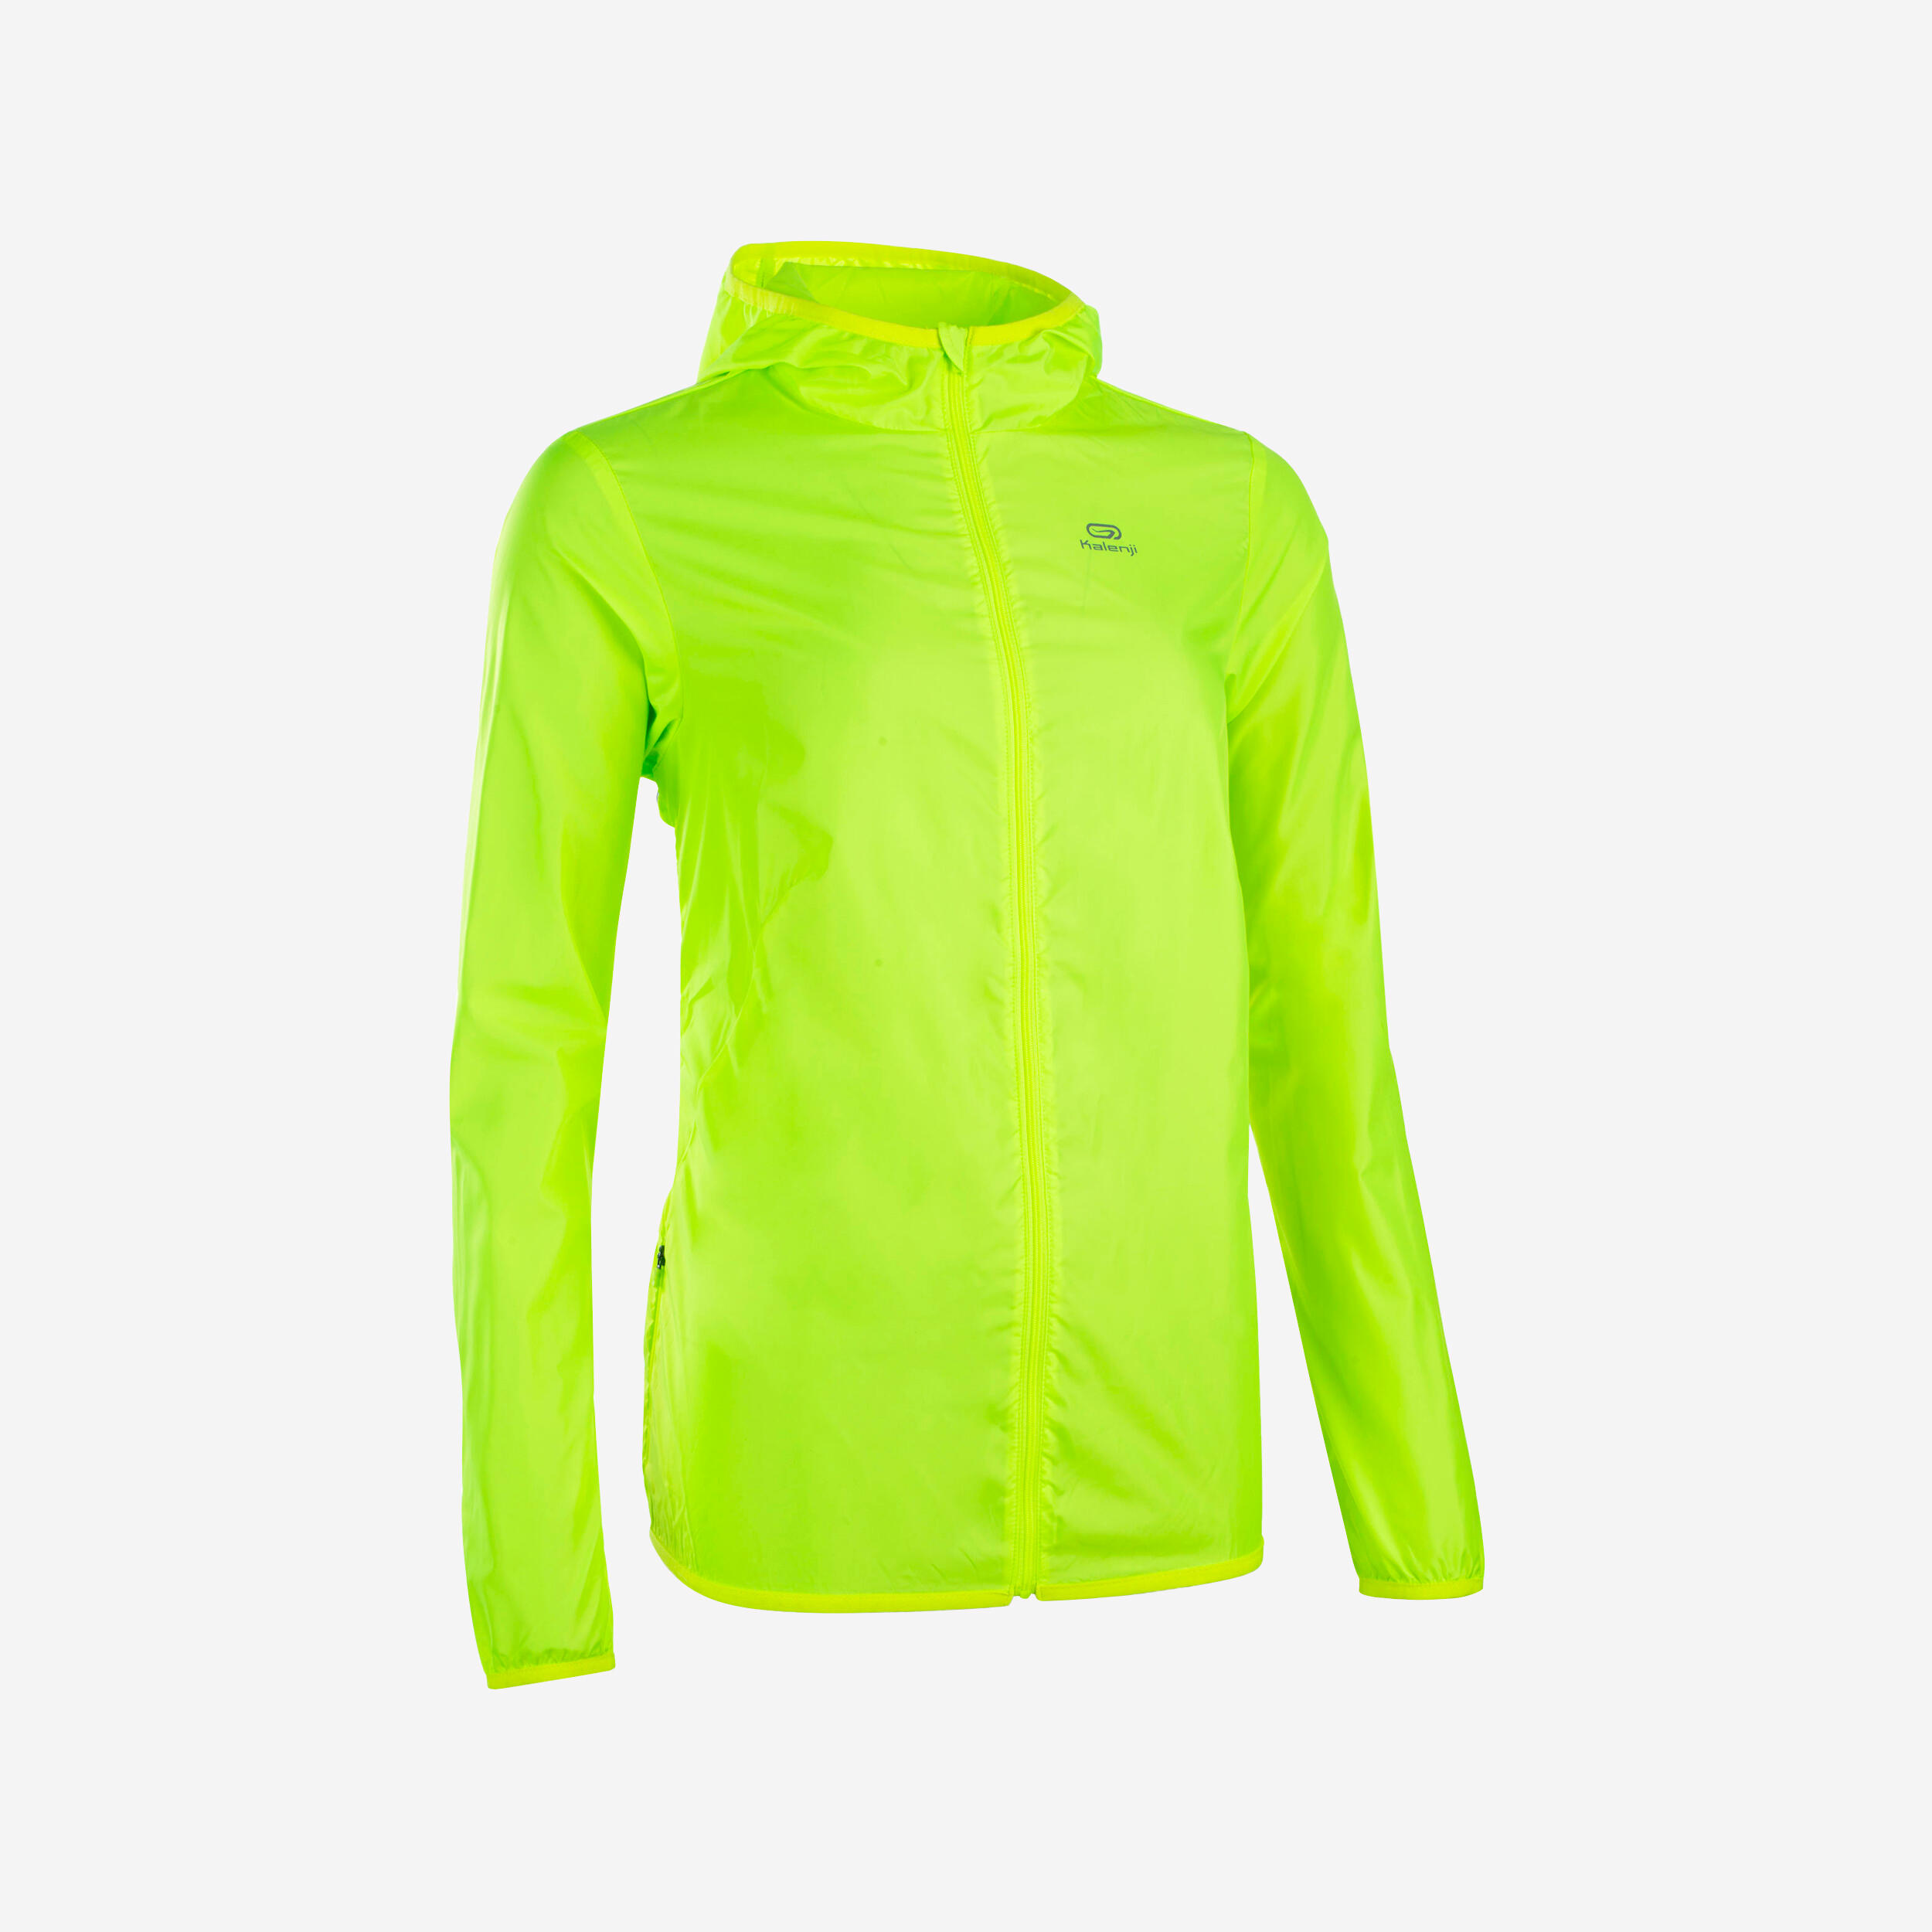 women's reflective waterproof running jacket